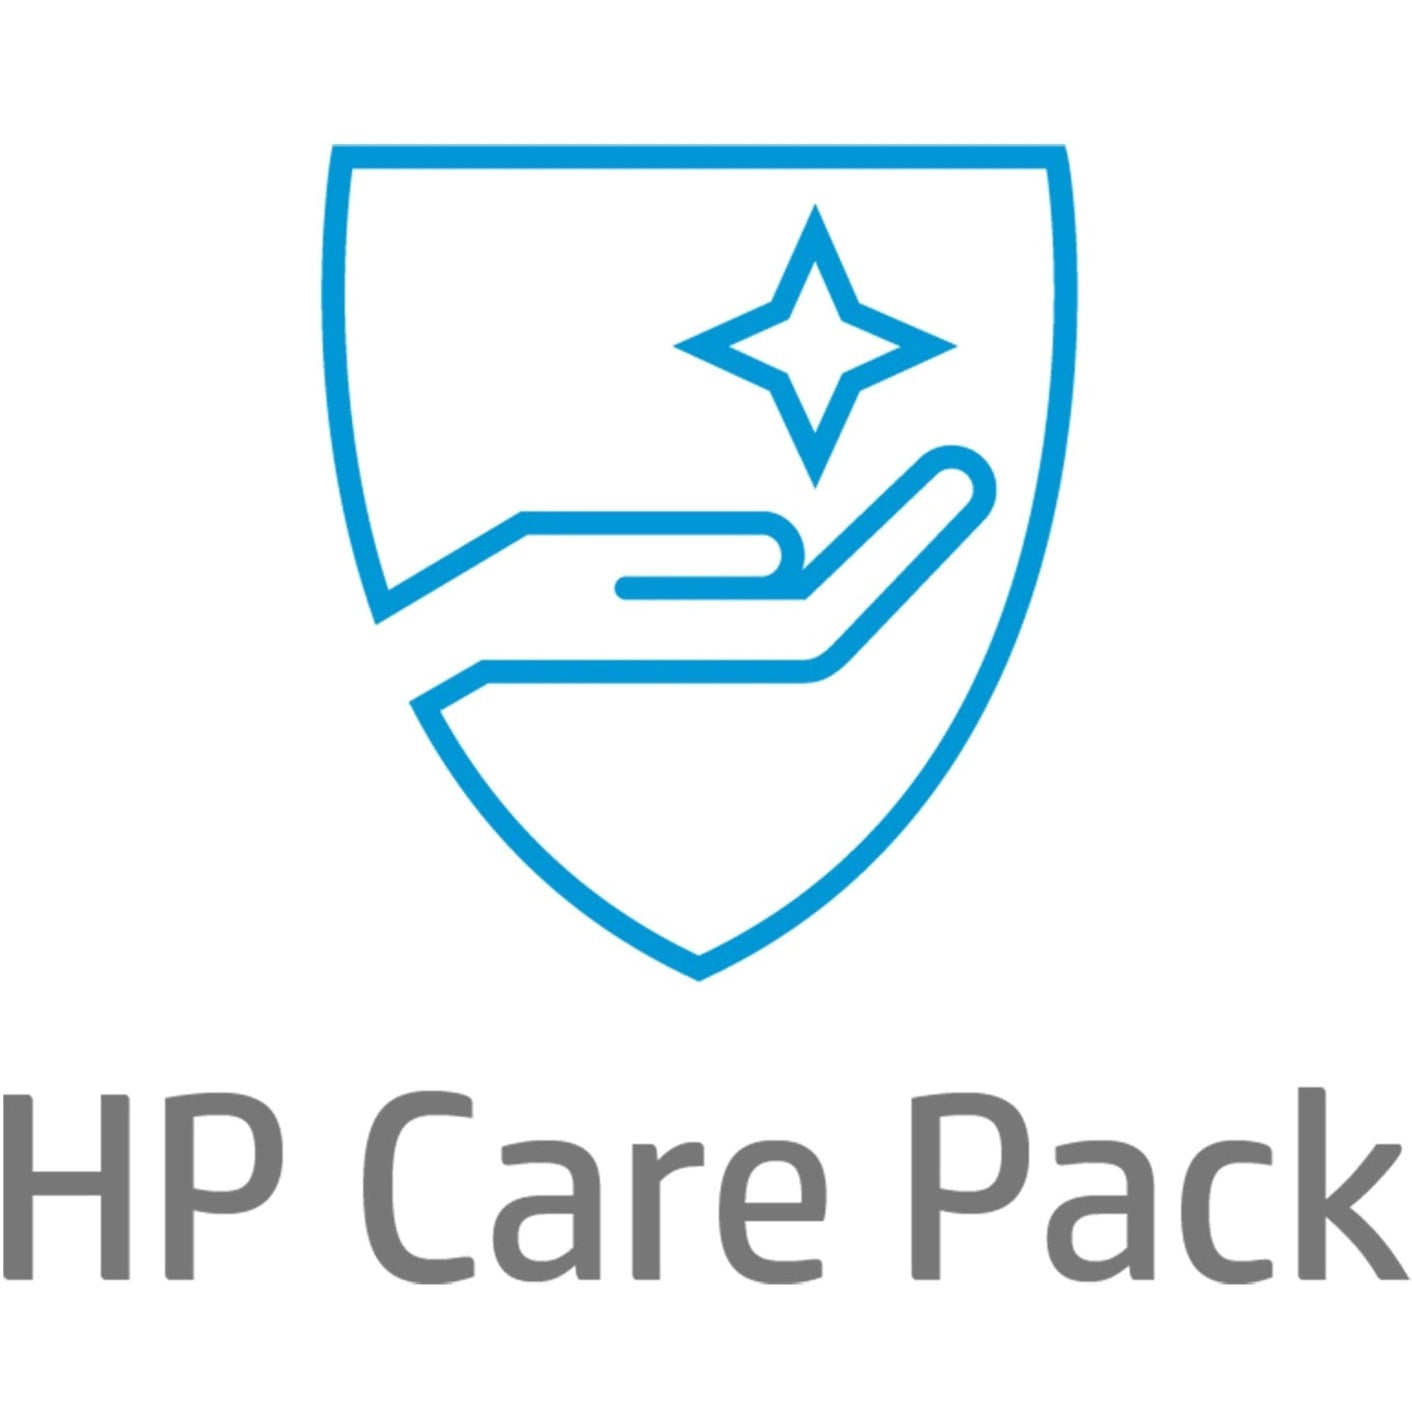 HP Care Pack - 5 Year - Warranty (U9EF4E)